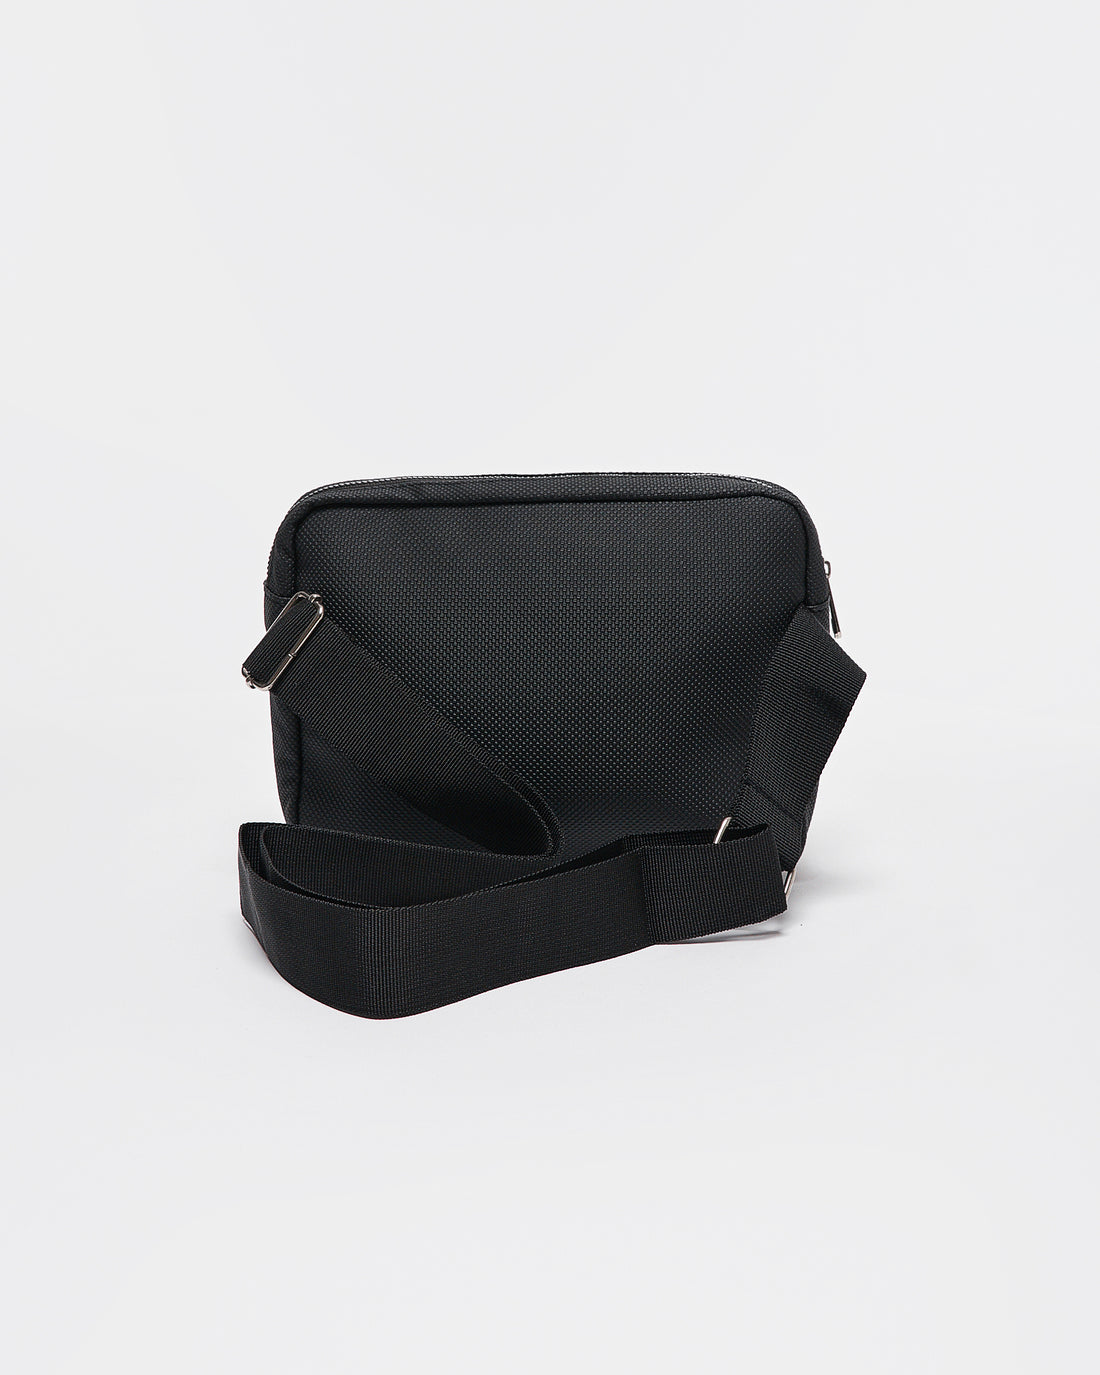 LAC Black  Sling Bag 16.90